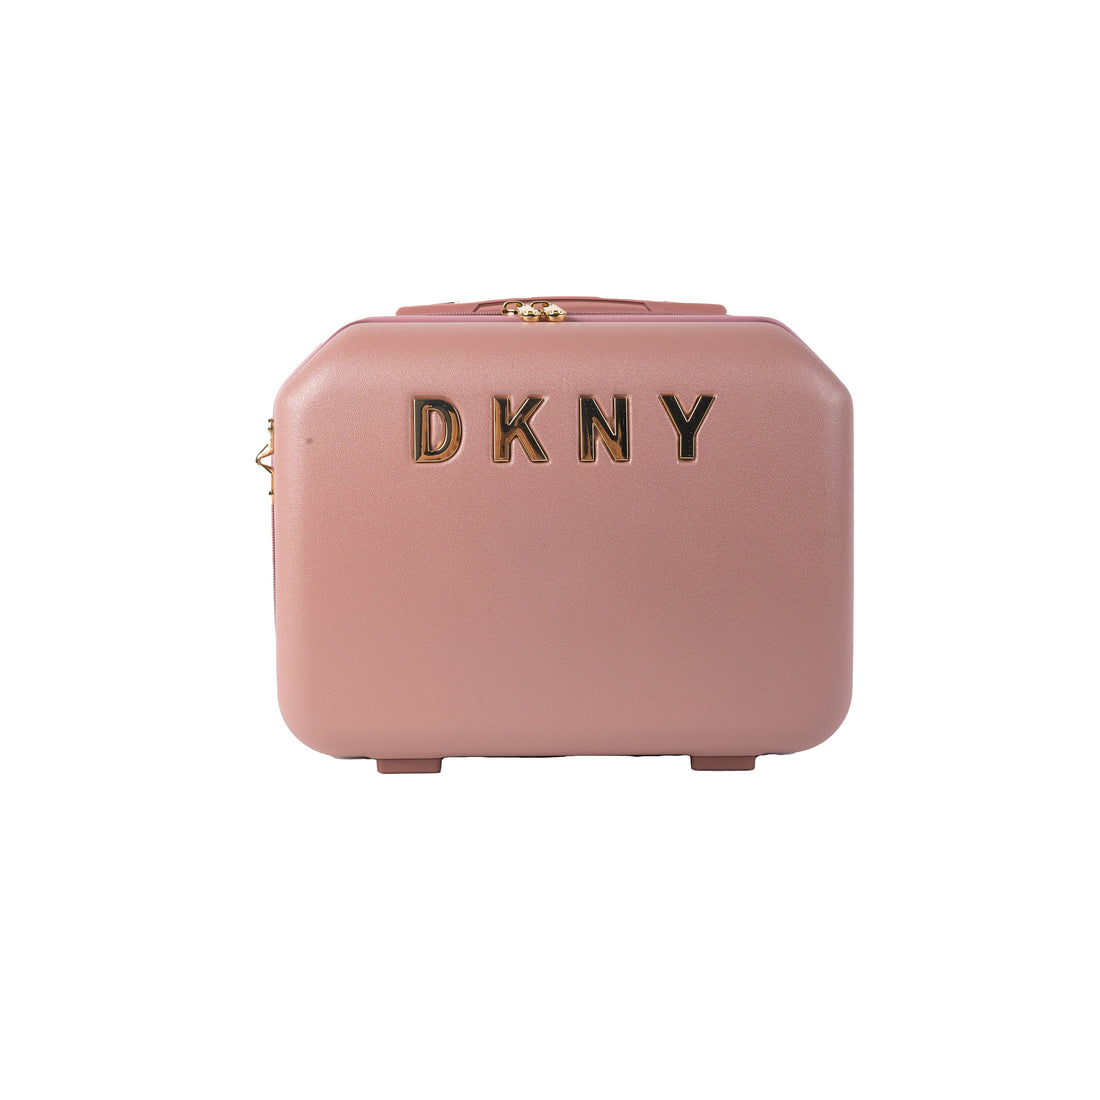 DKNY Red Beauty Case